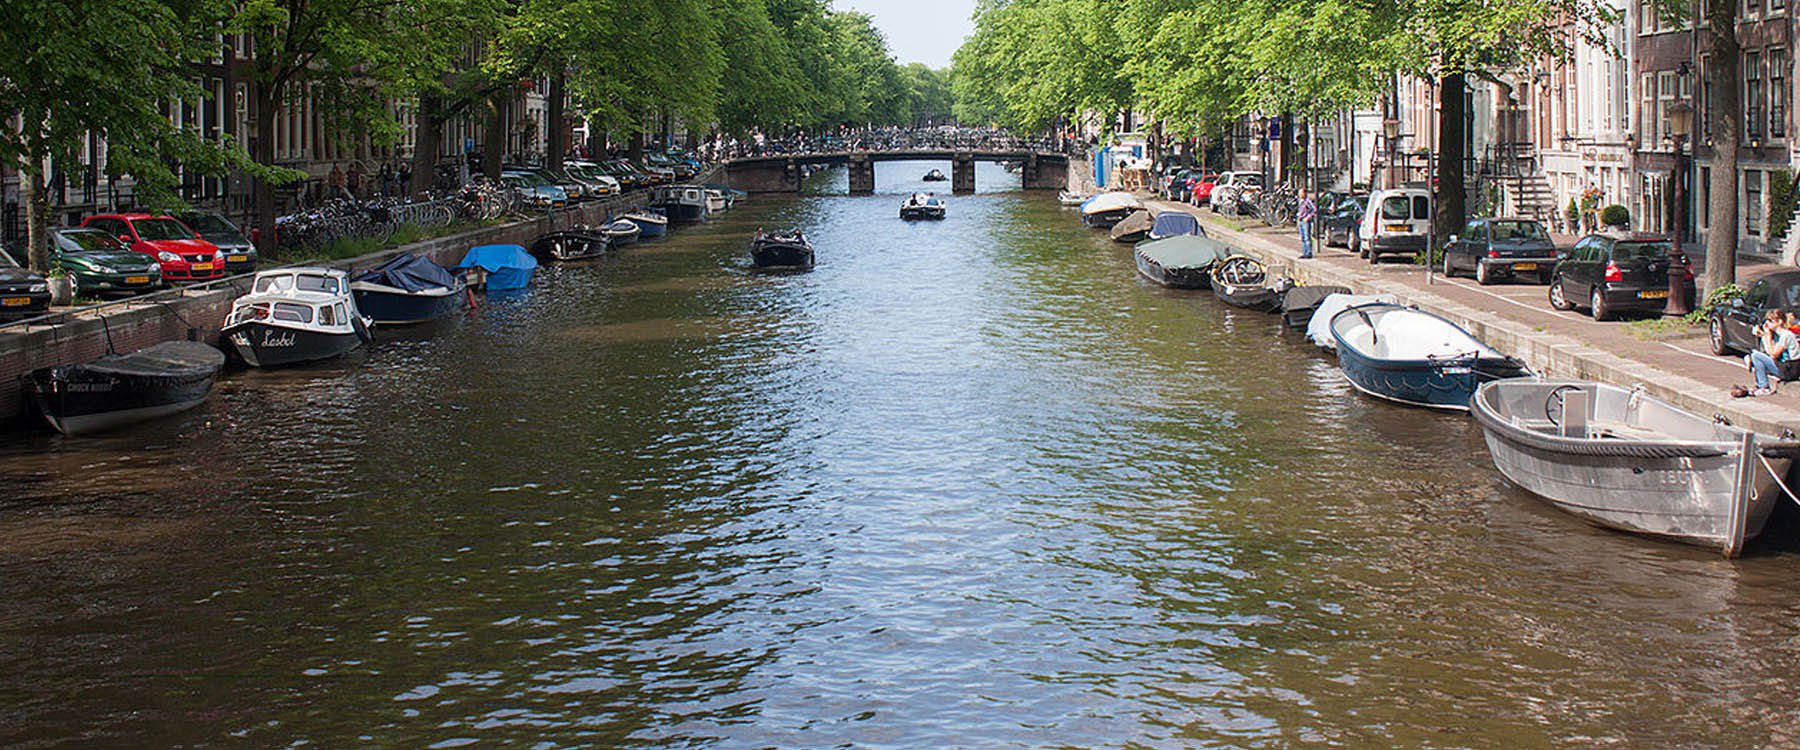 iPad crazy Amsterdam event slider 3.jpg